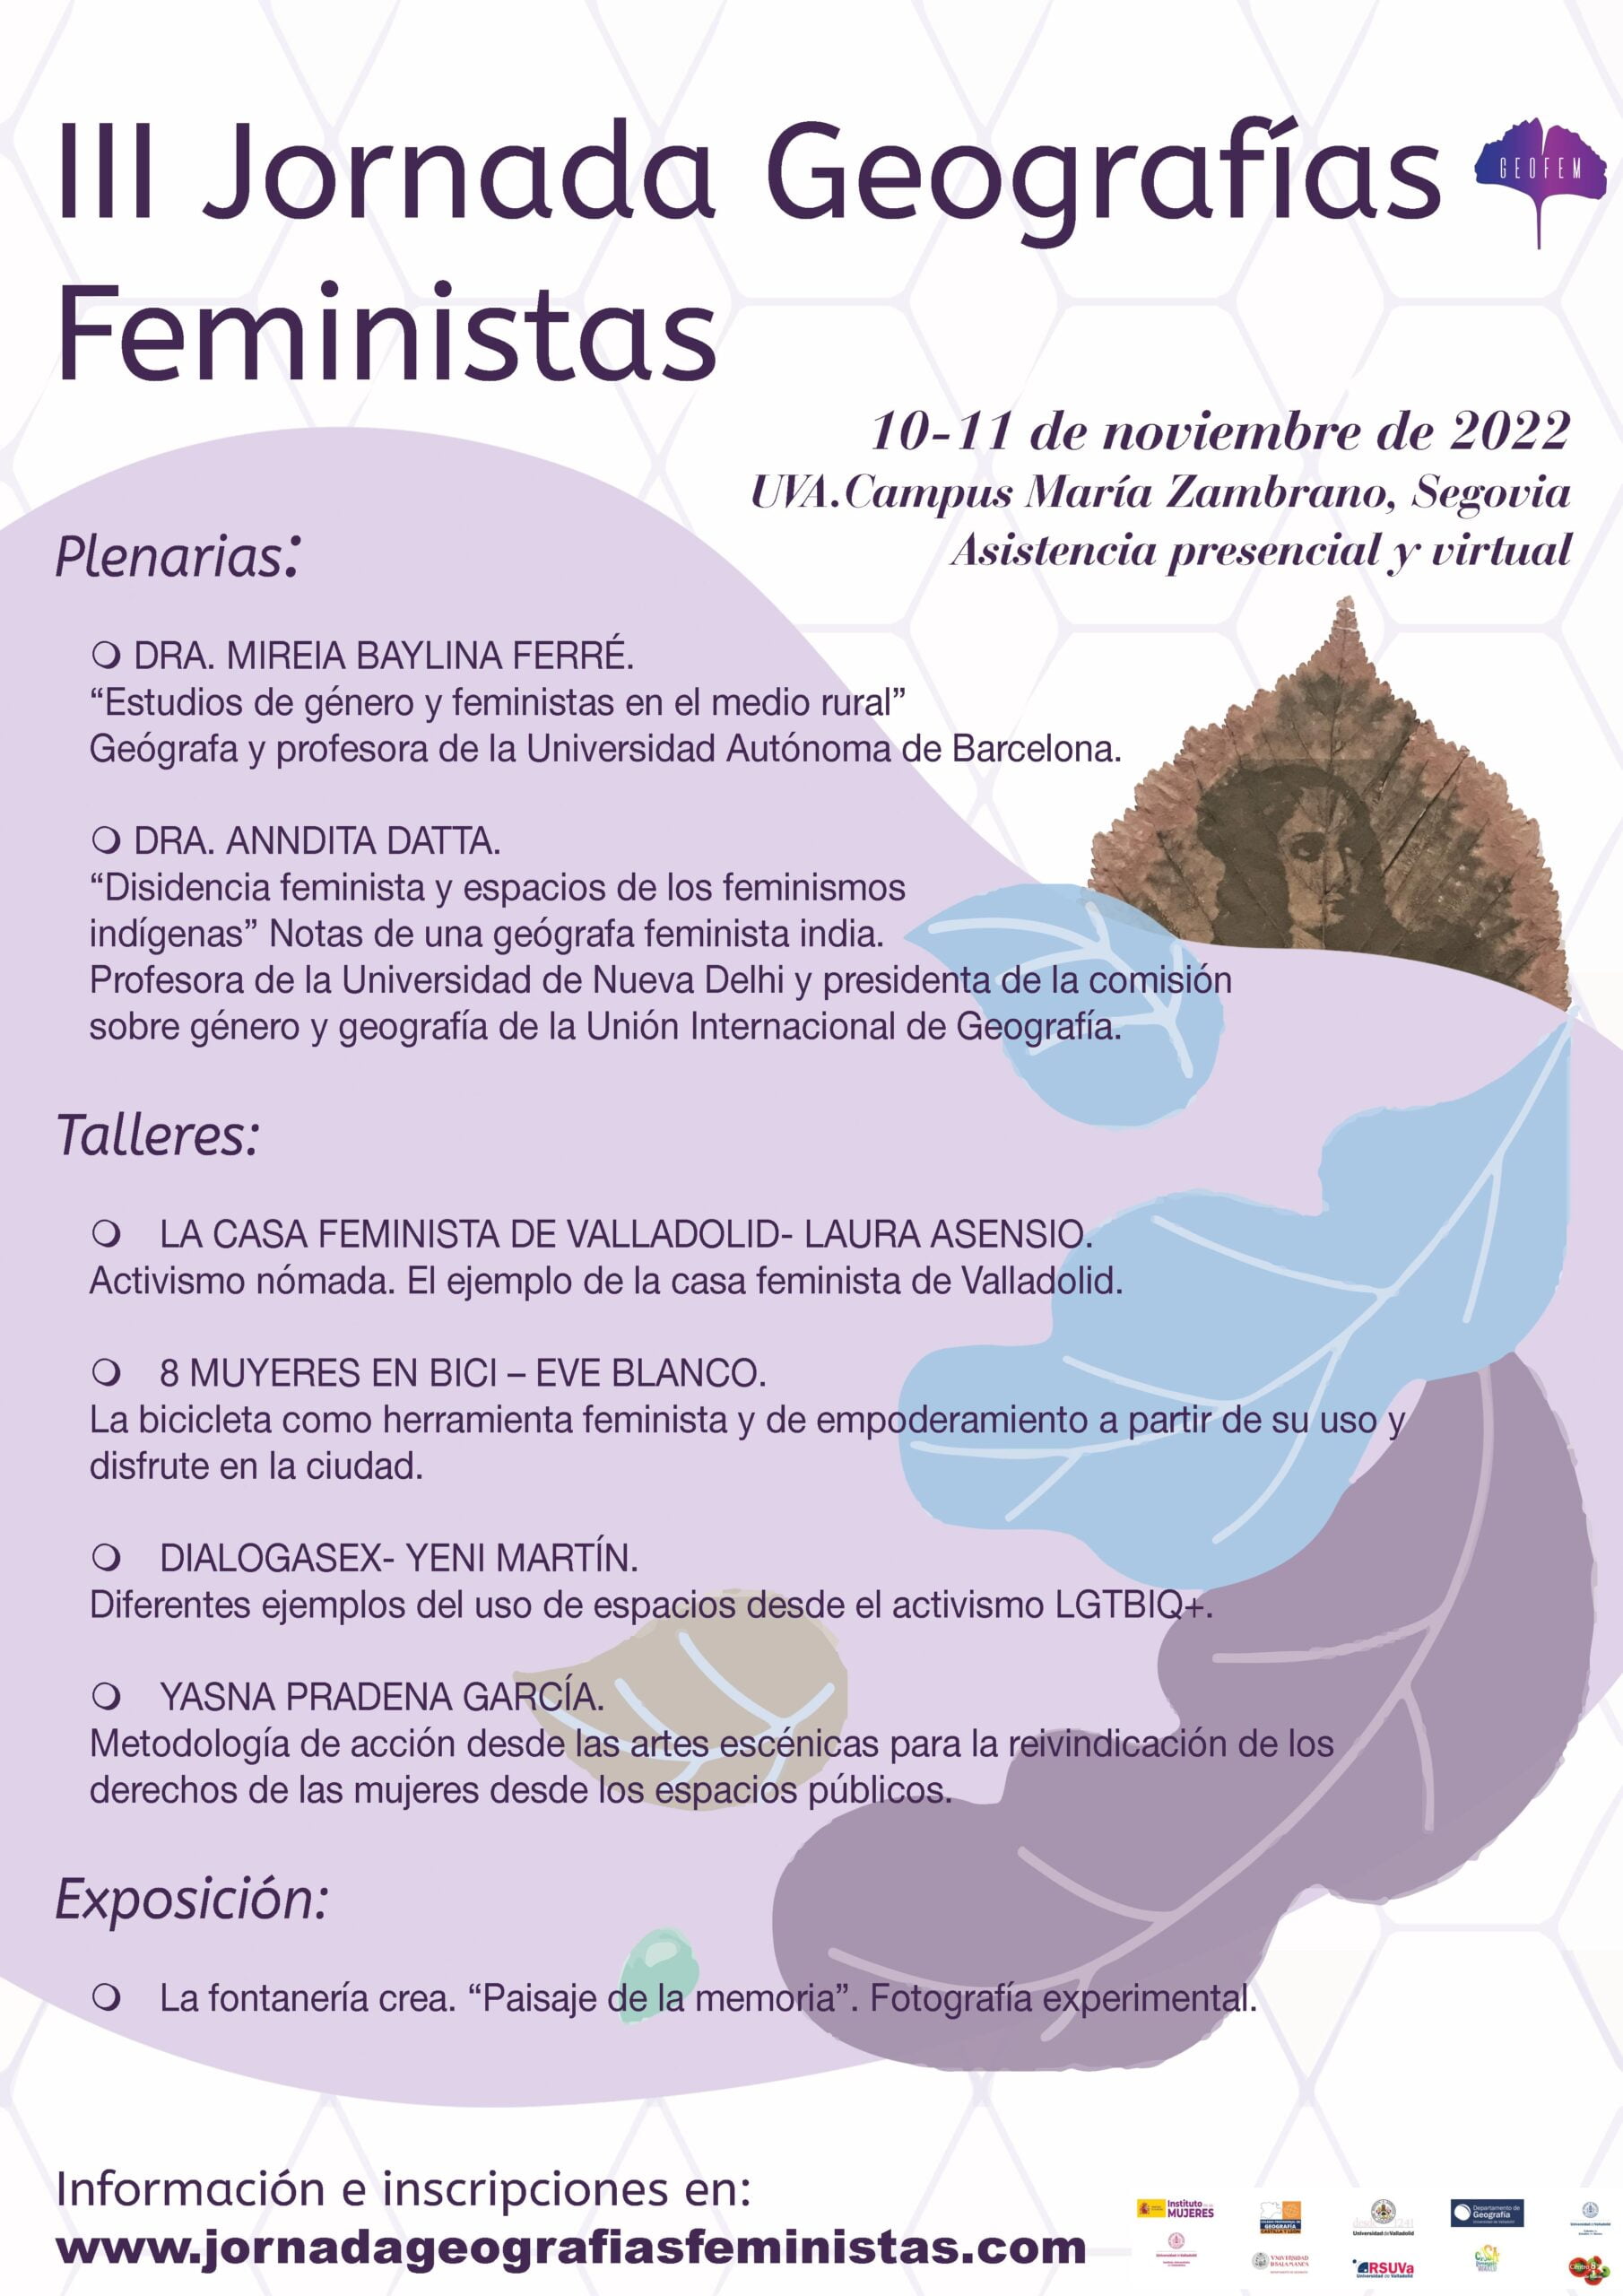 III Jornada Geografías Feministas